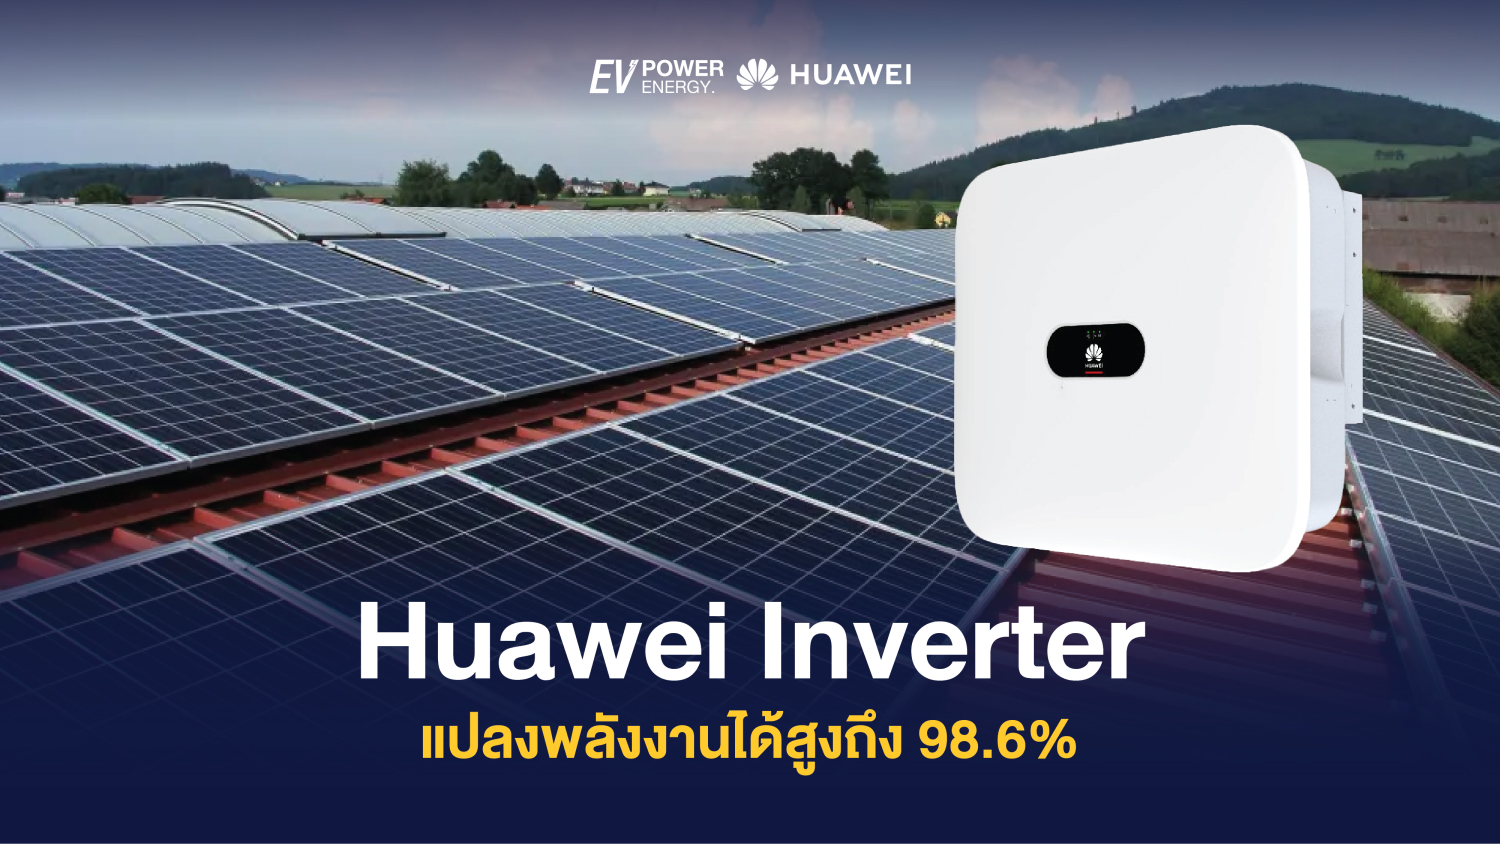 Huawei inverter แปลงพลังงานได้สูงถึง 98.6% 1